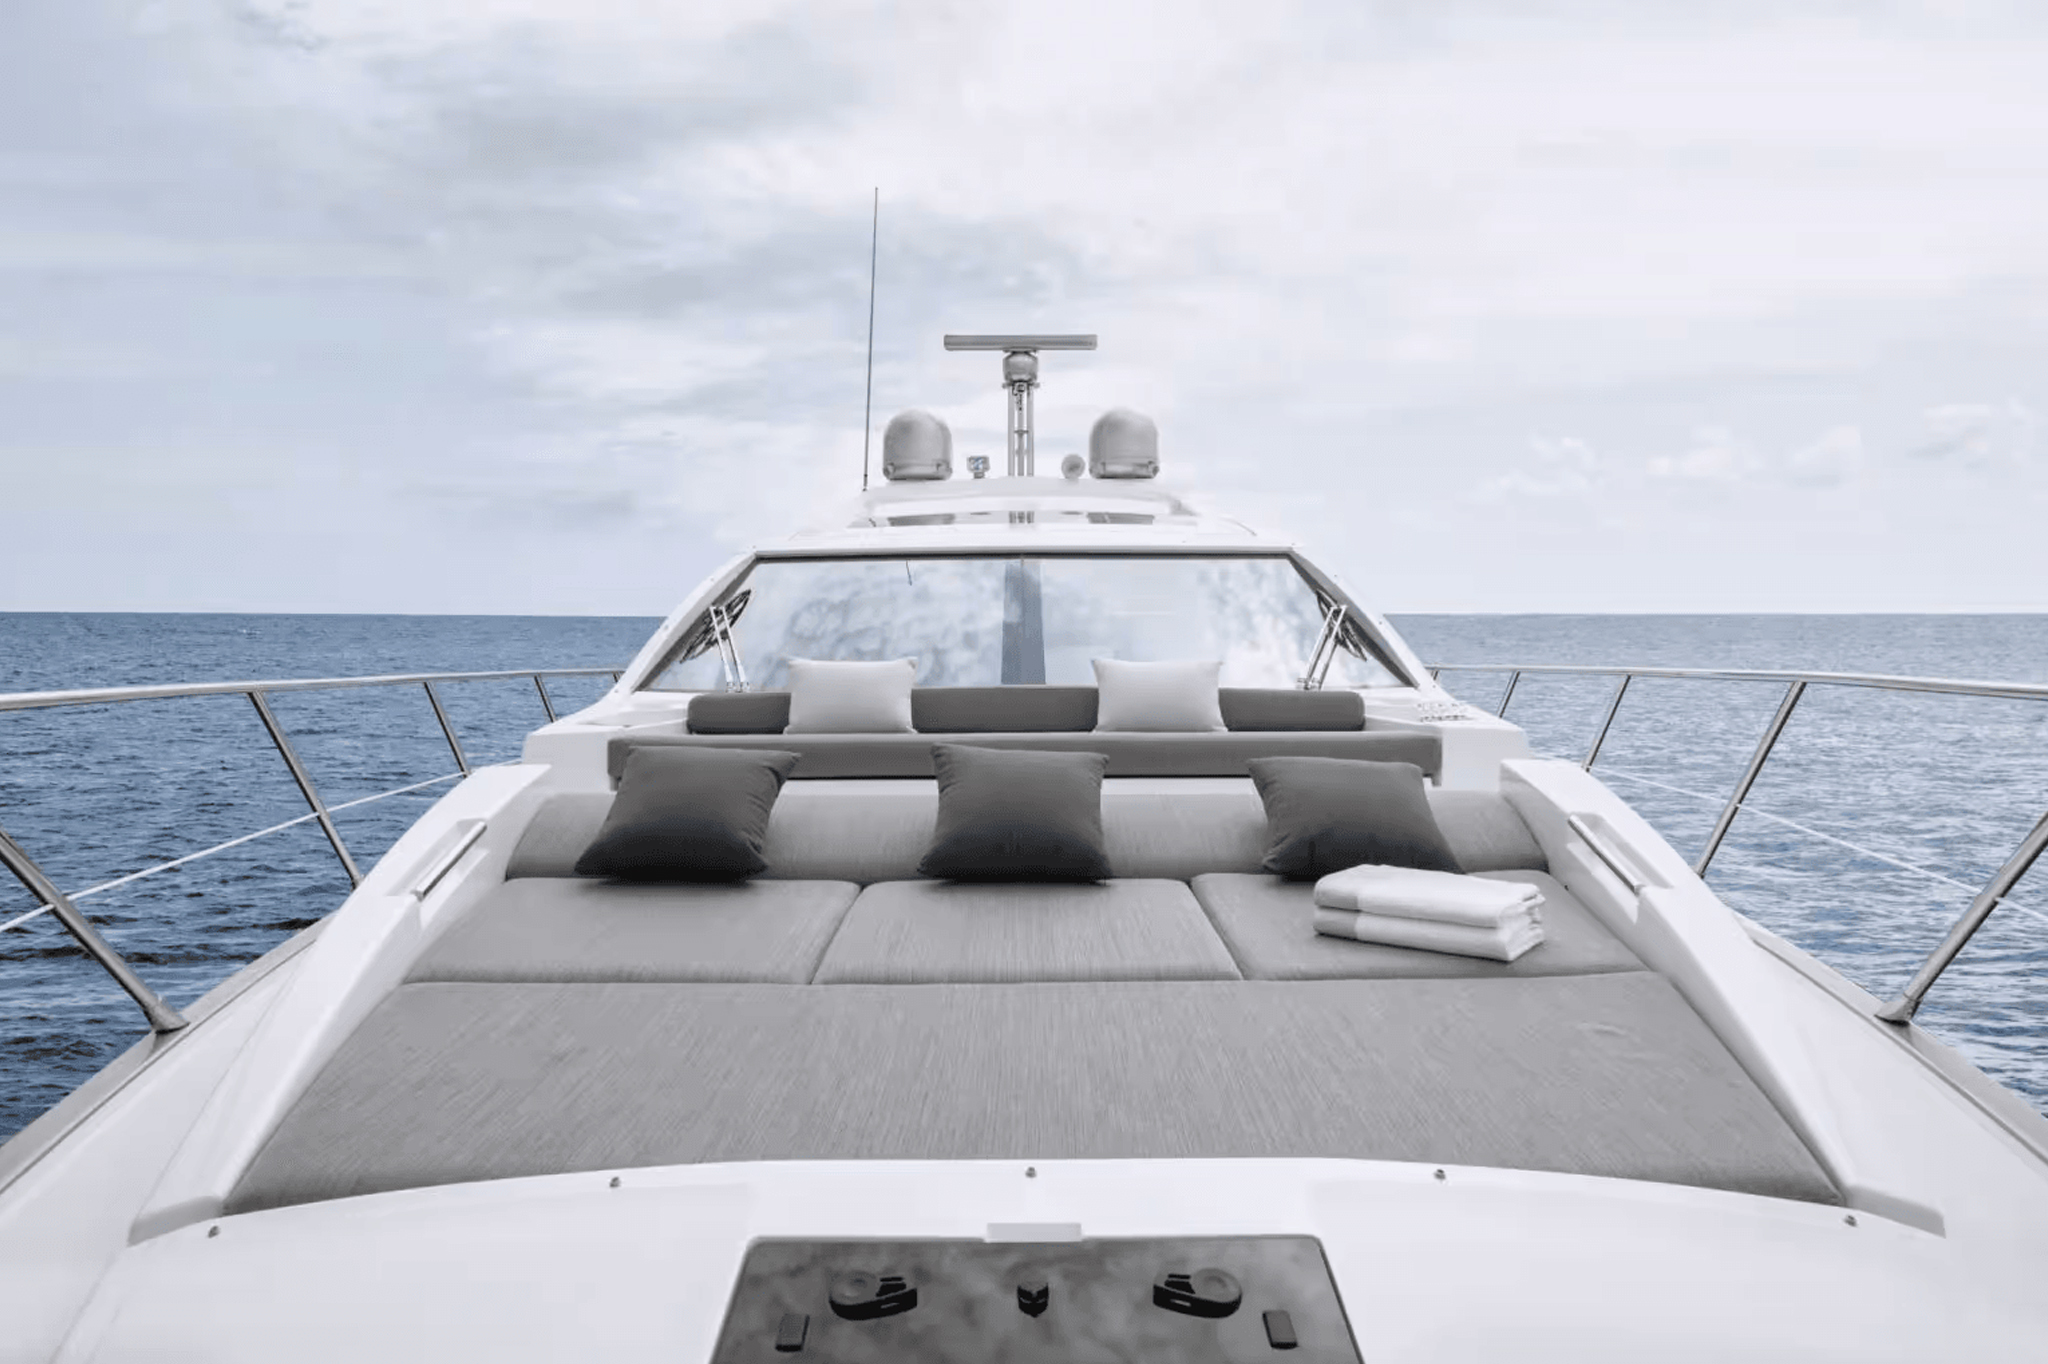 Azimut S6 - AB Lease Yacht Charter Belgium Croatia